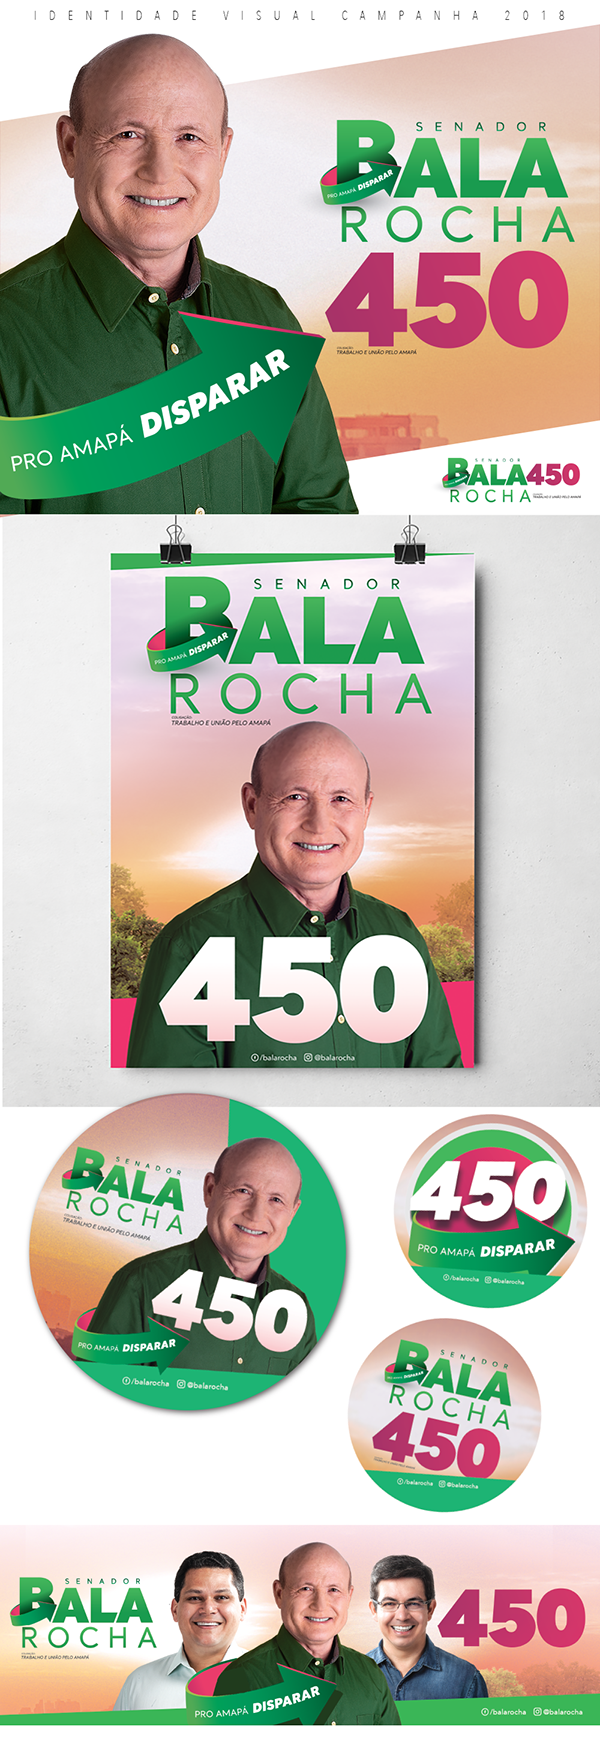 Identidade Visual campanha Senador Bala Rocha